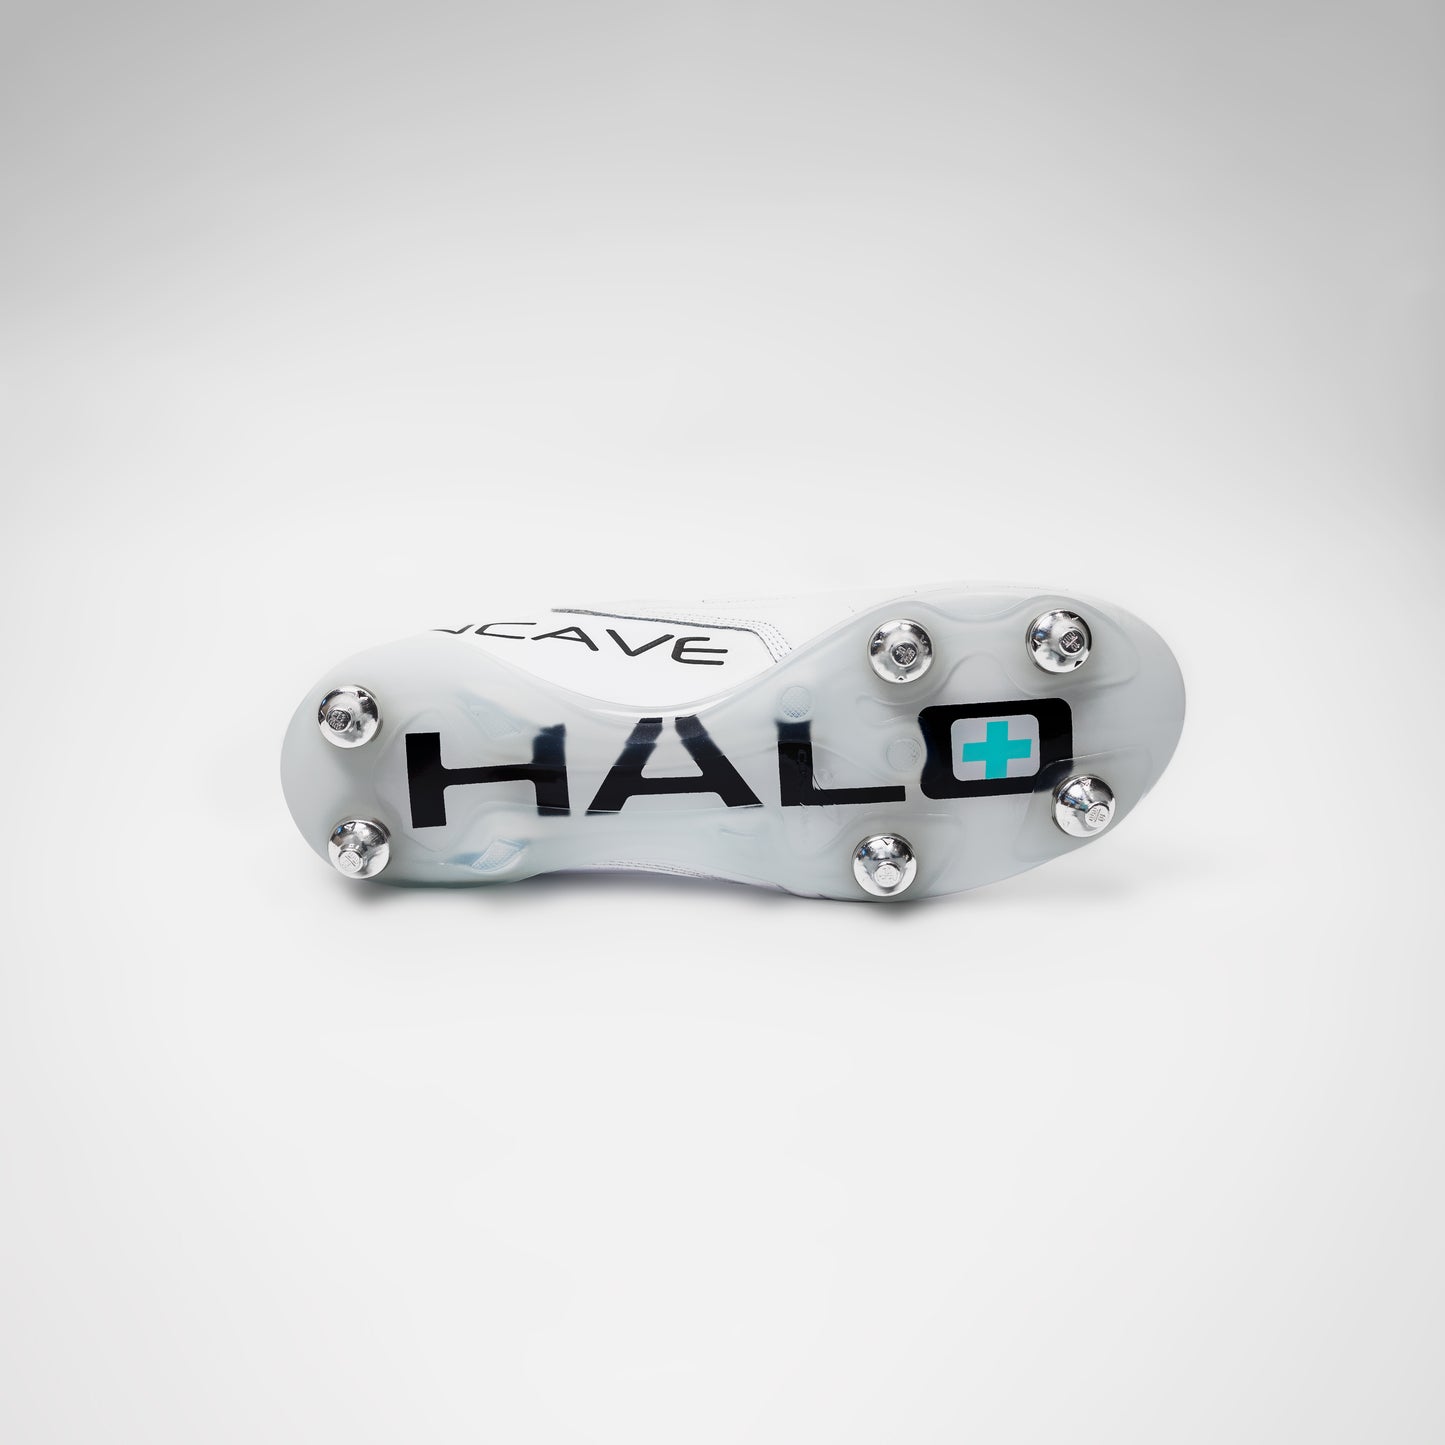 Concave Halo + Pro v2 SG - White/Cyan/Black